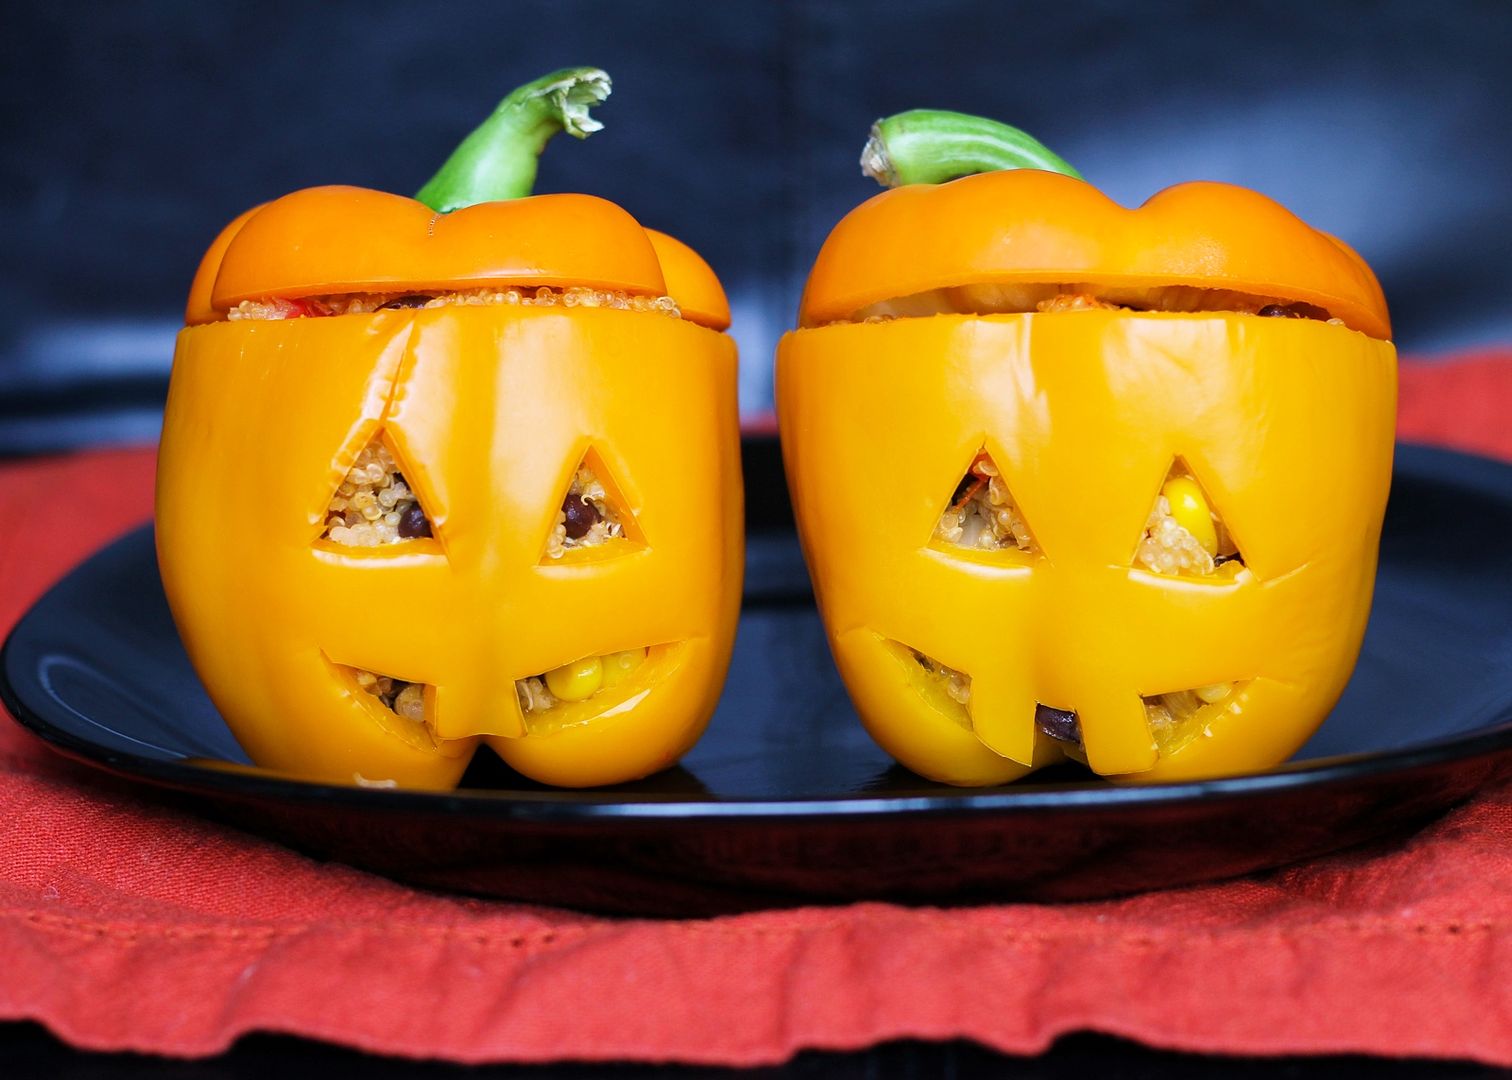 Southwestern Quinoa Stuffed Pepper Jack O' Lanterns - easy and fun dinner idea for Halloween!